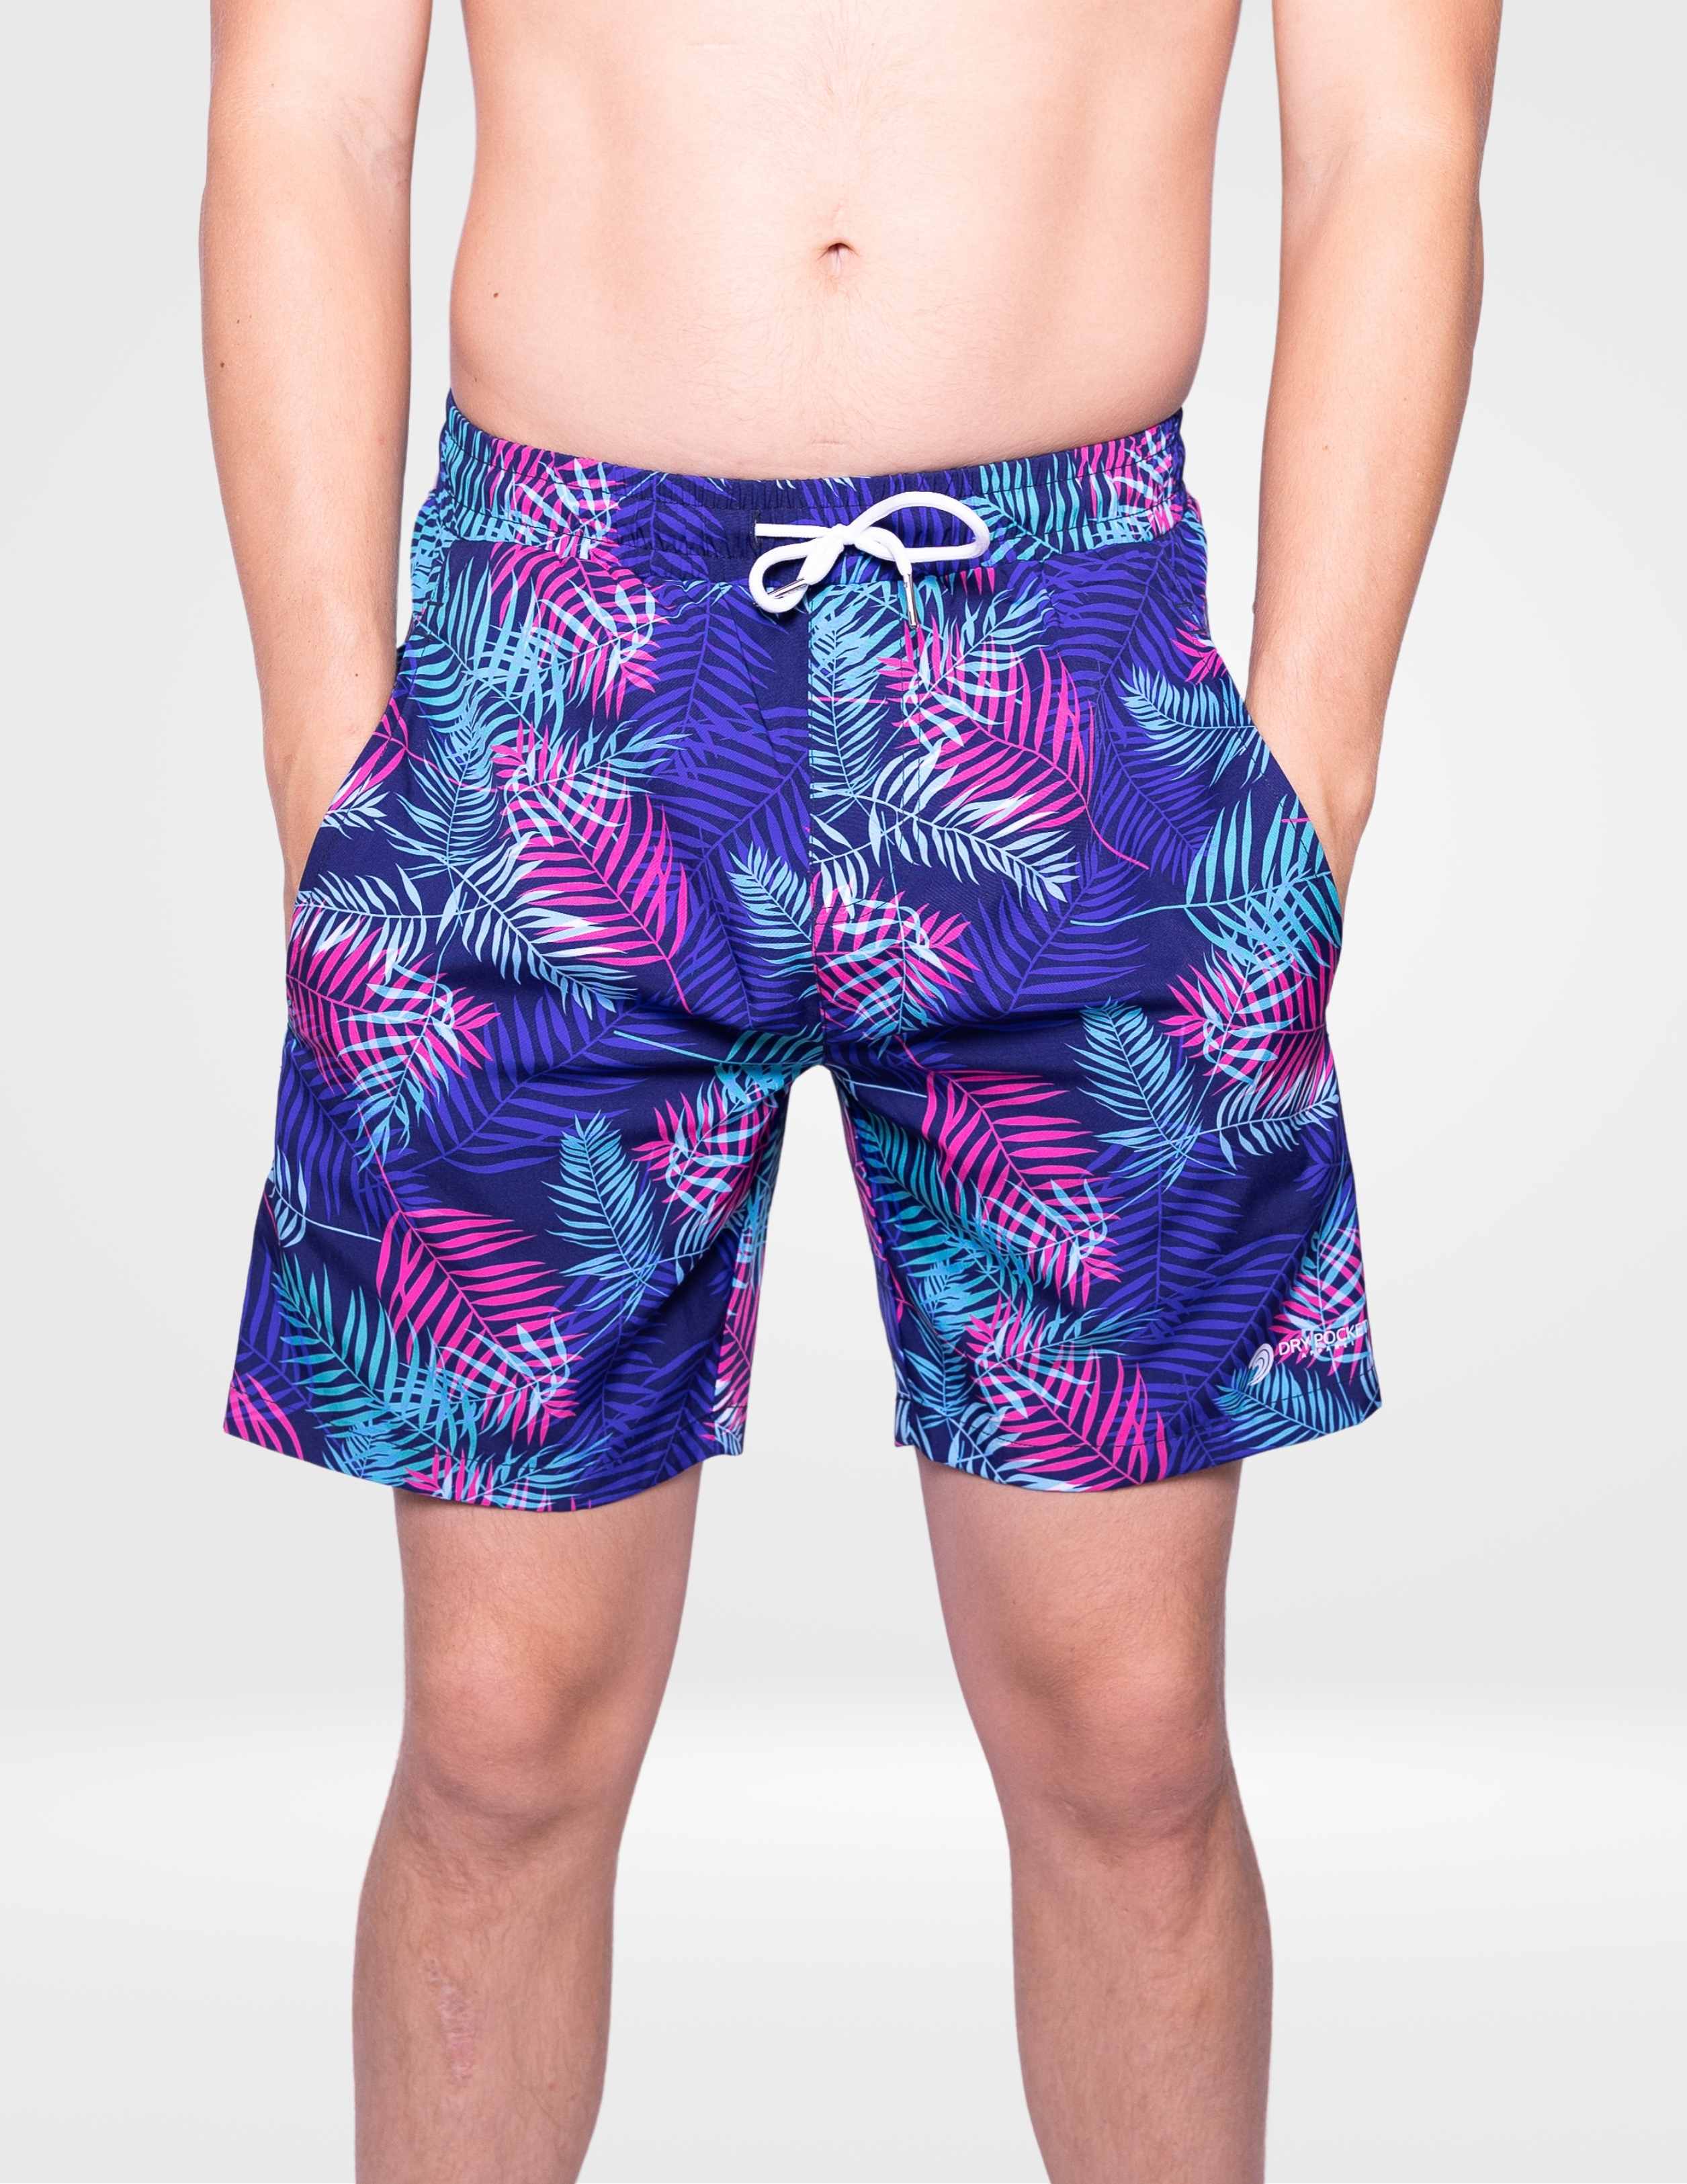 Waterproof Swim Shorts With Dry Bag Pocket – Dry Pocket Apparel